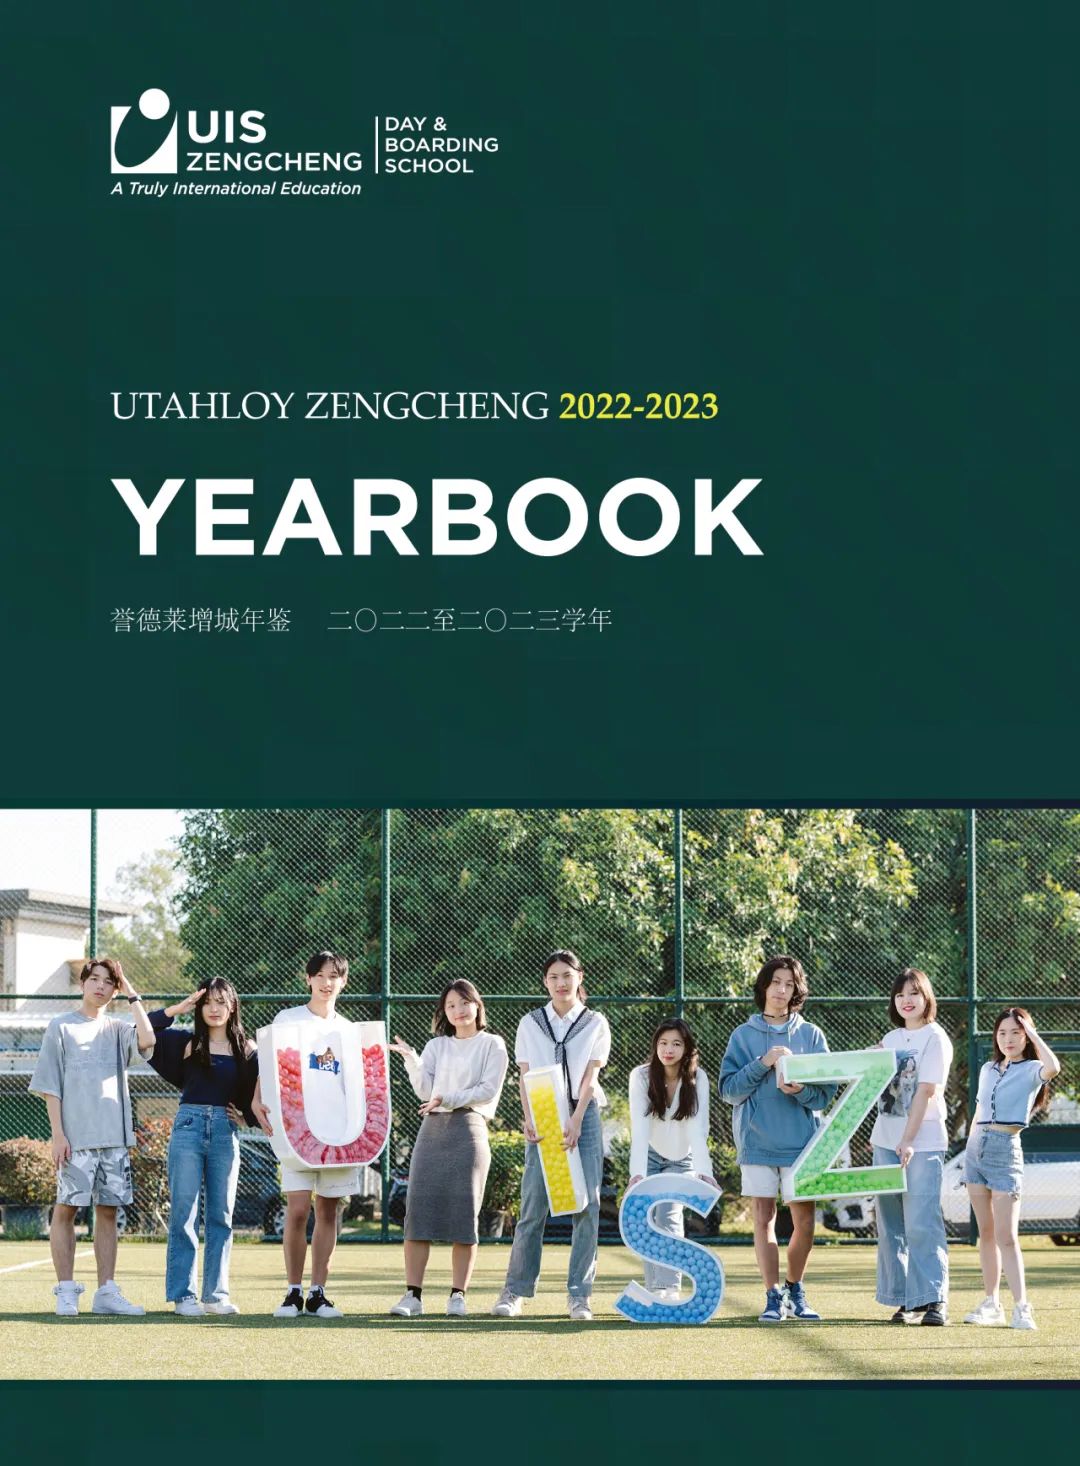 YEARBOOK丨誉德莱年鉴2022/23正式出版：属于UISZ的独家记忆！